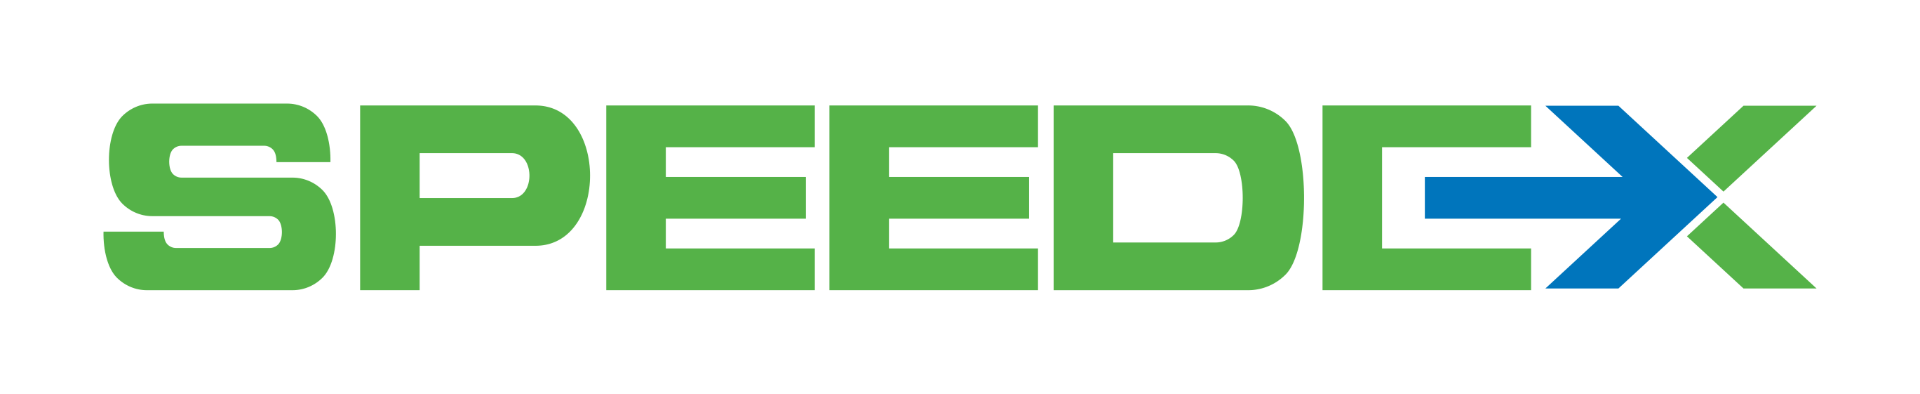 speedex-logo-1.png?mtime=20190612132237#asset:128727